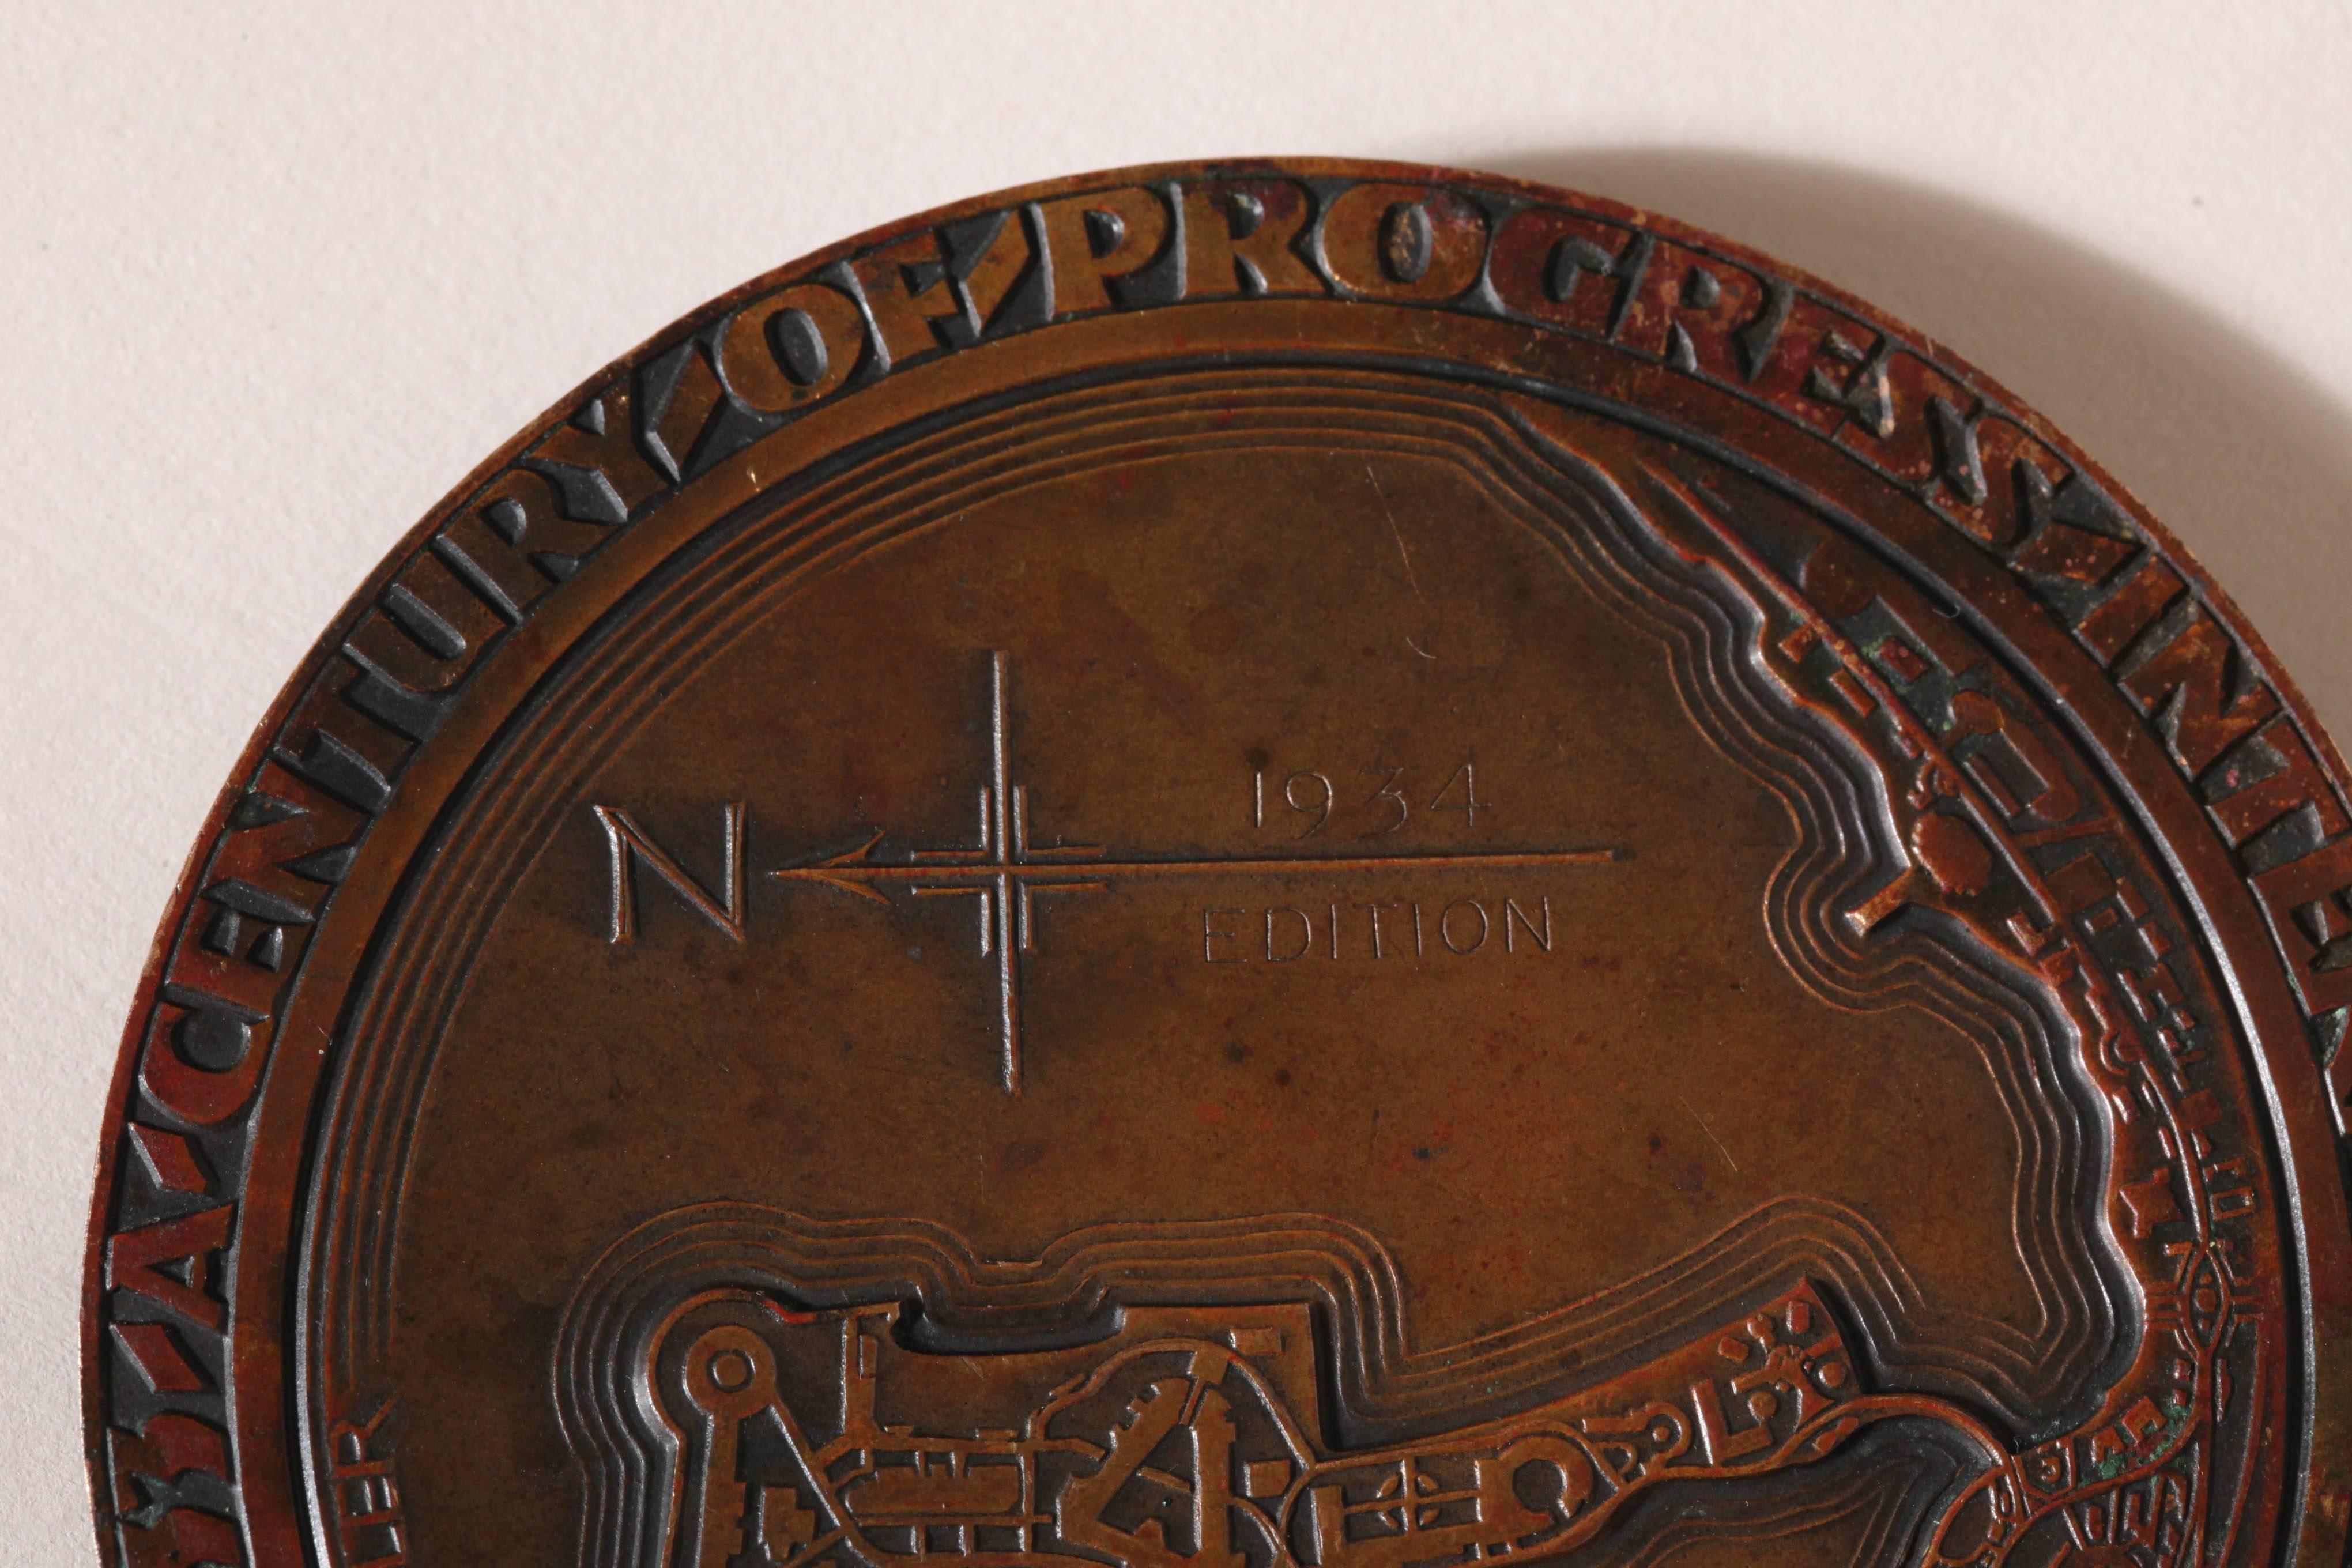 20th Century American Art Deco Medal Commemorating Century of Progress International Expo